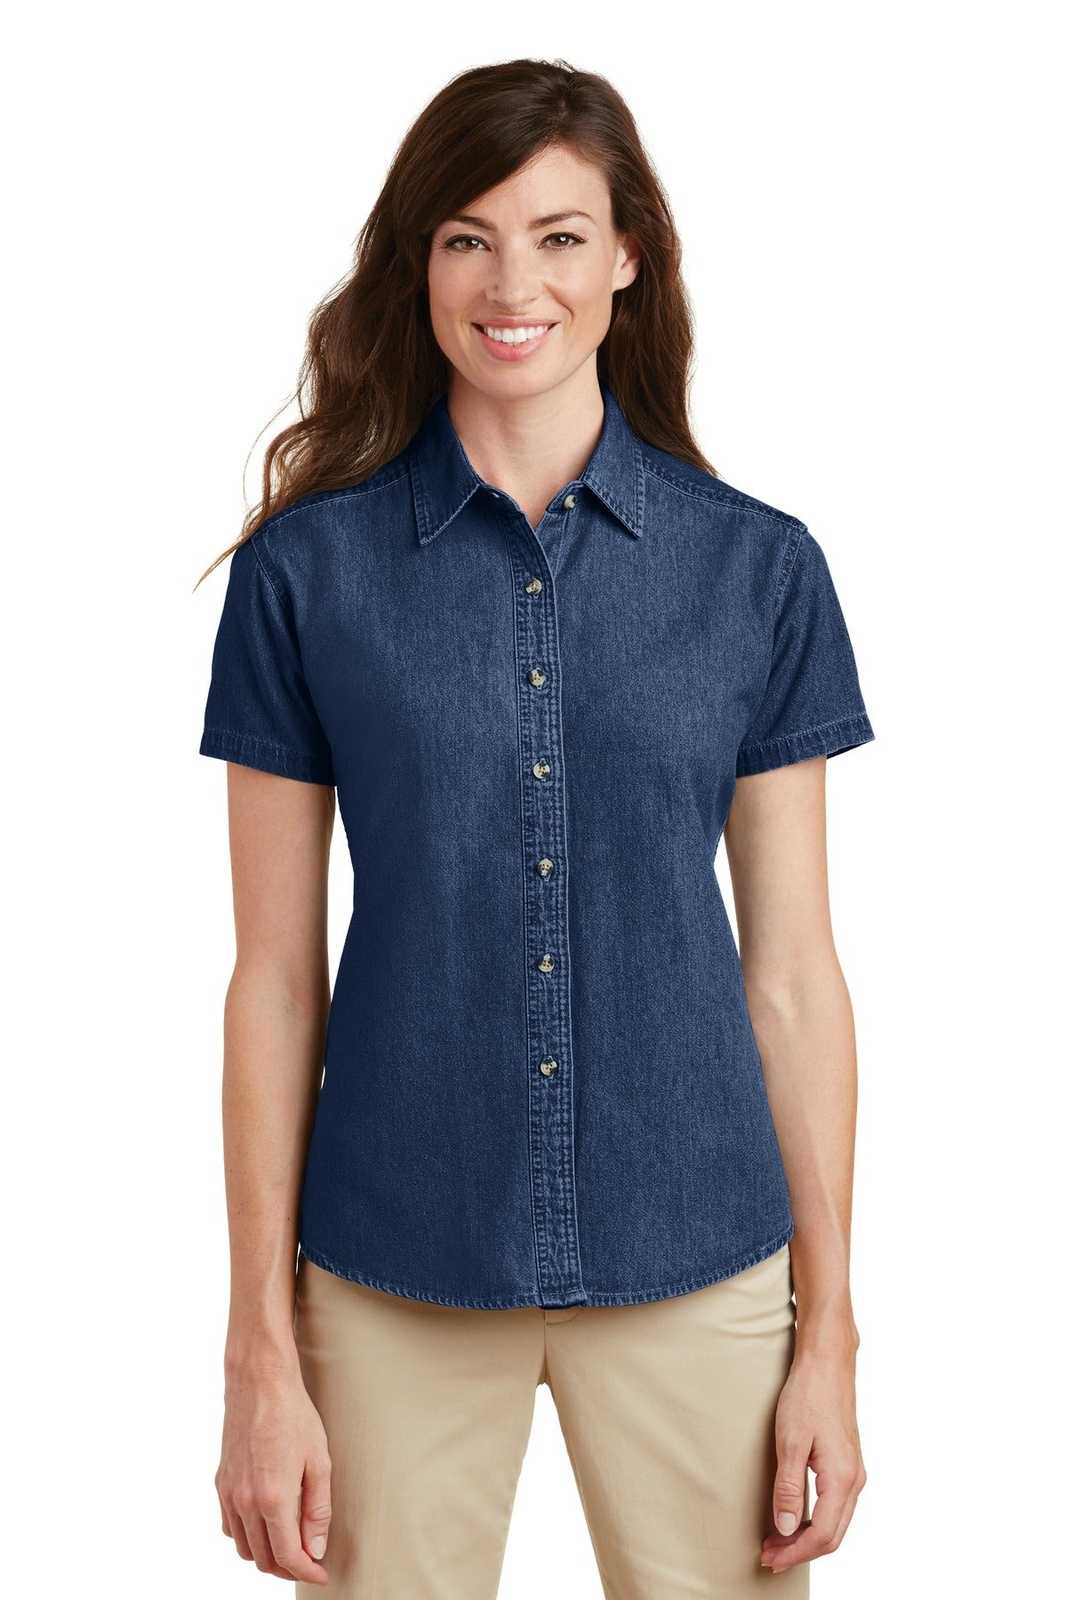 Port & Company LSP11 Ladies Short Sleeve Value Denim Shirt - Ink Blue - HIT a Double - 1